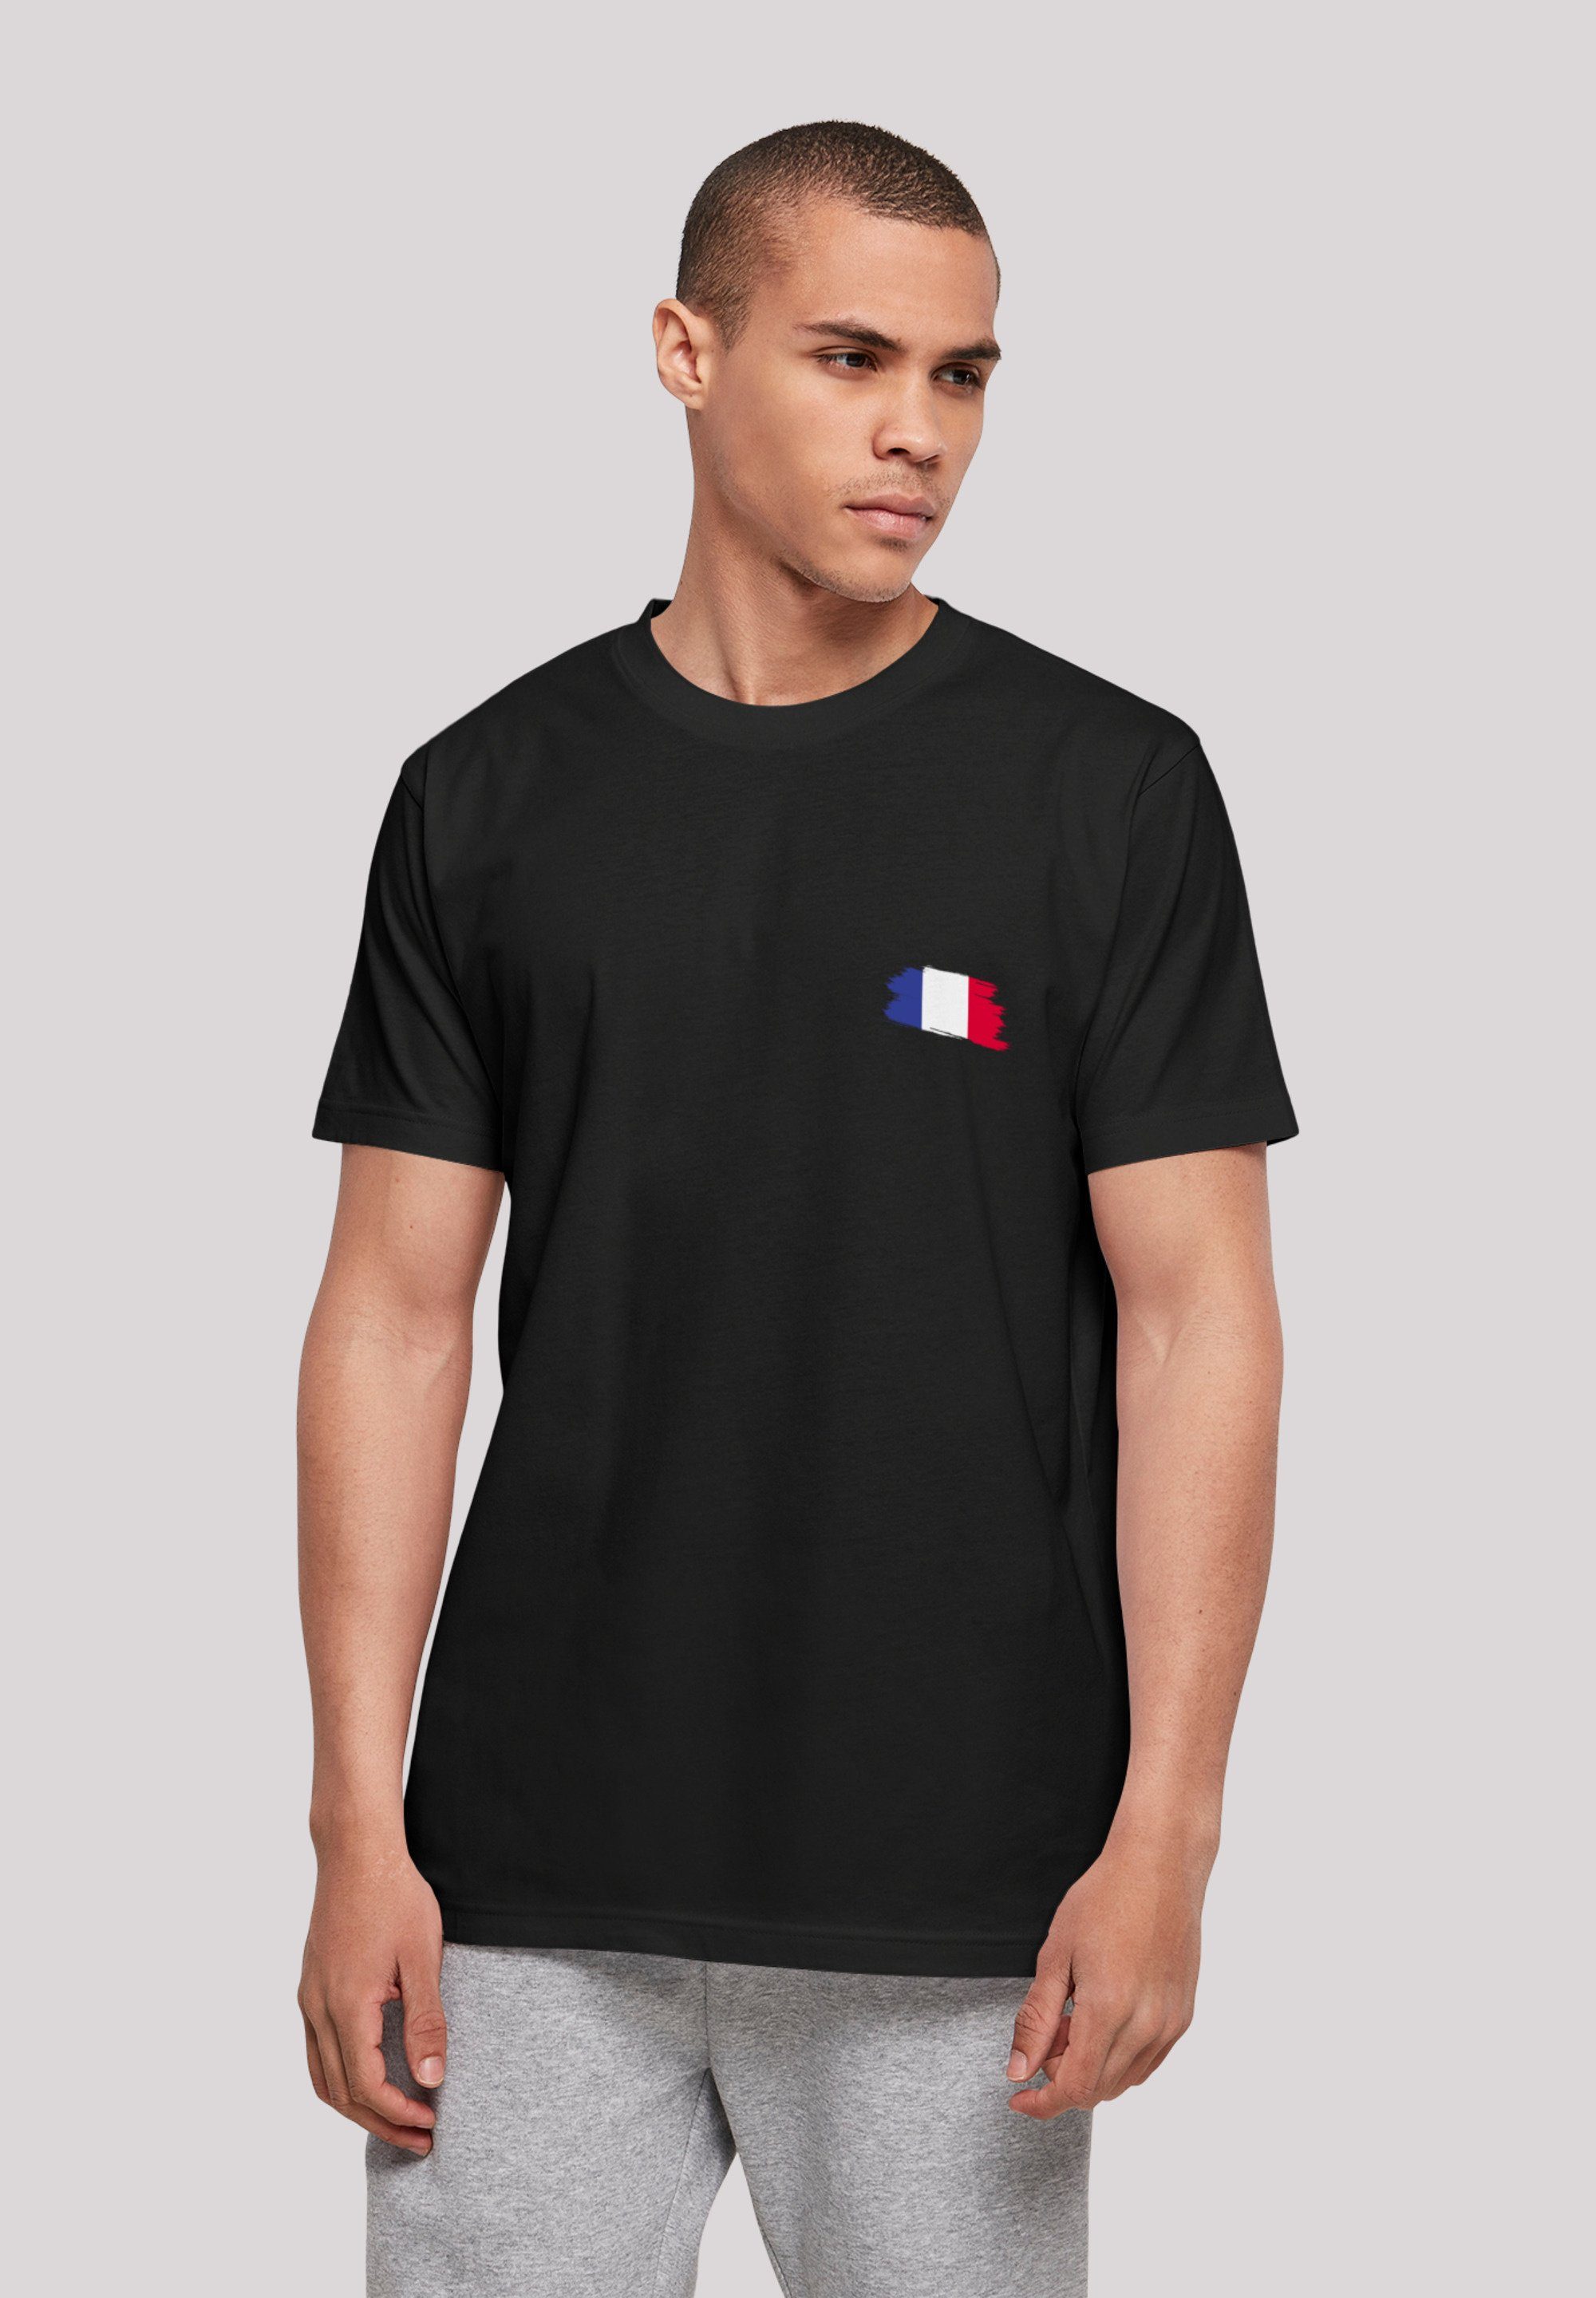 F4NT4STIC T-Shirt Frankreich Flagge France Print schwarz